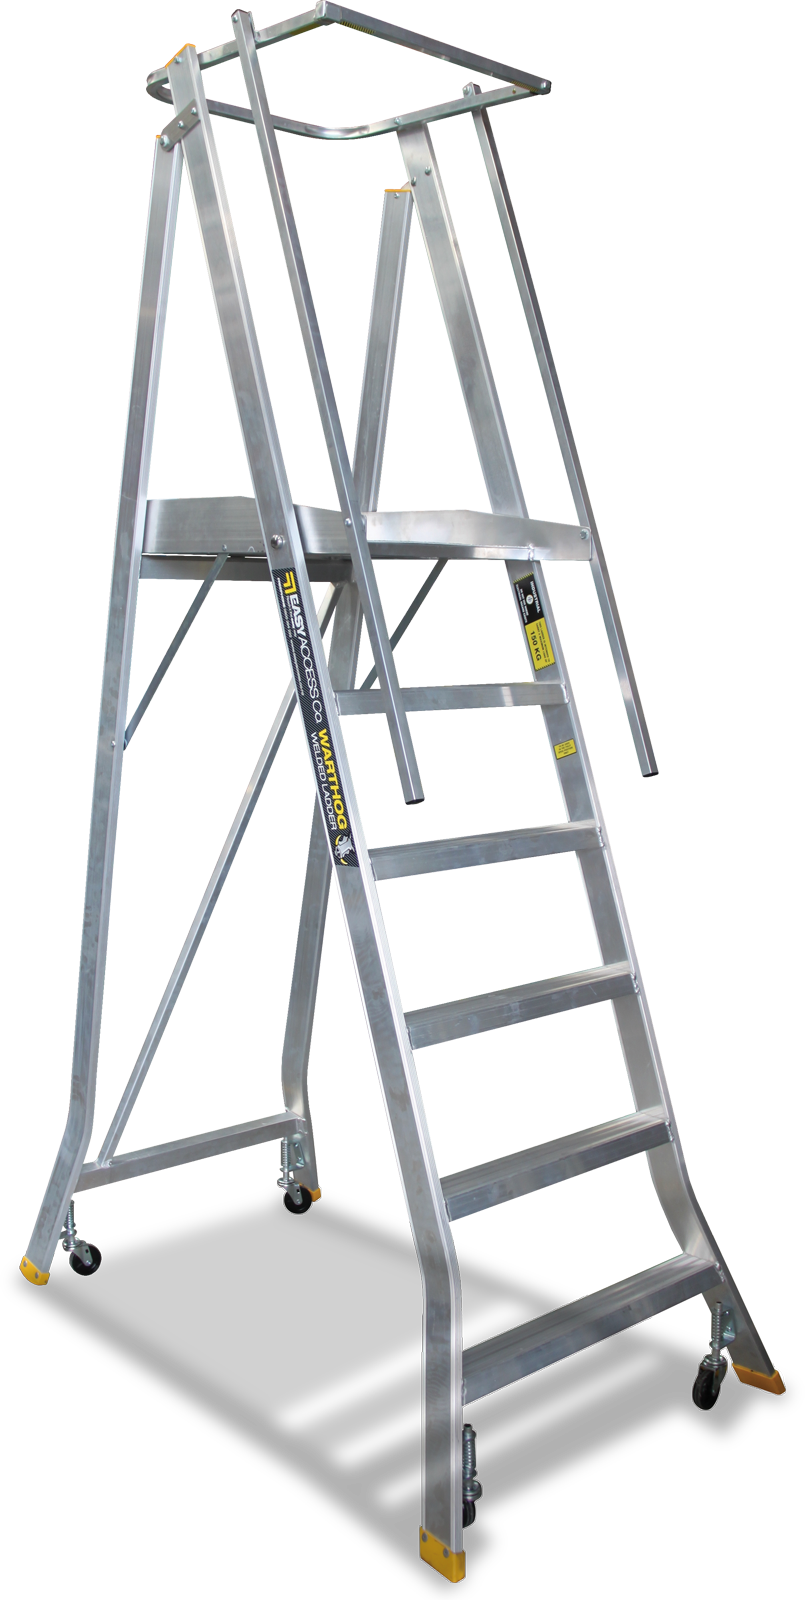 Light Aluminium Platform Ladder Heavy Duty with Wheels